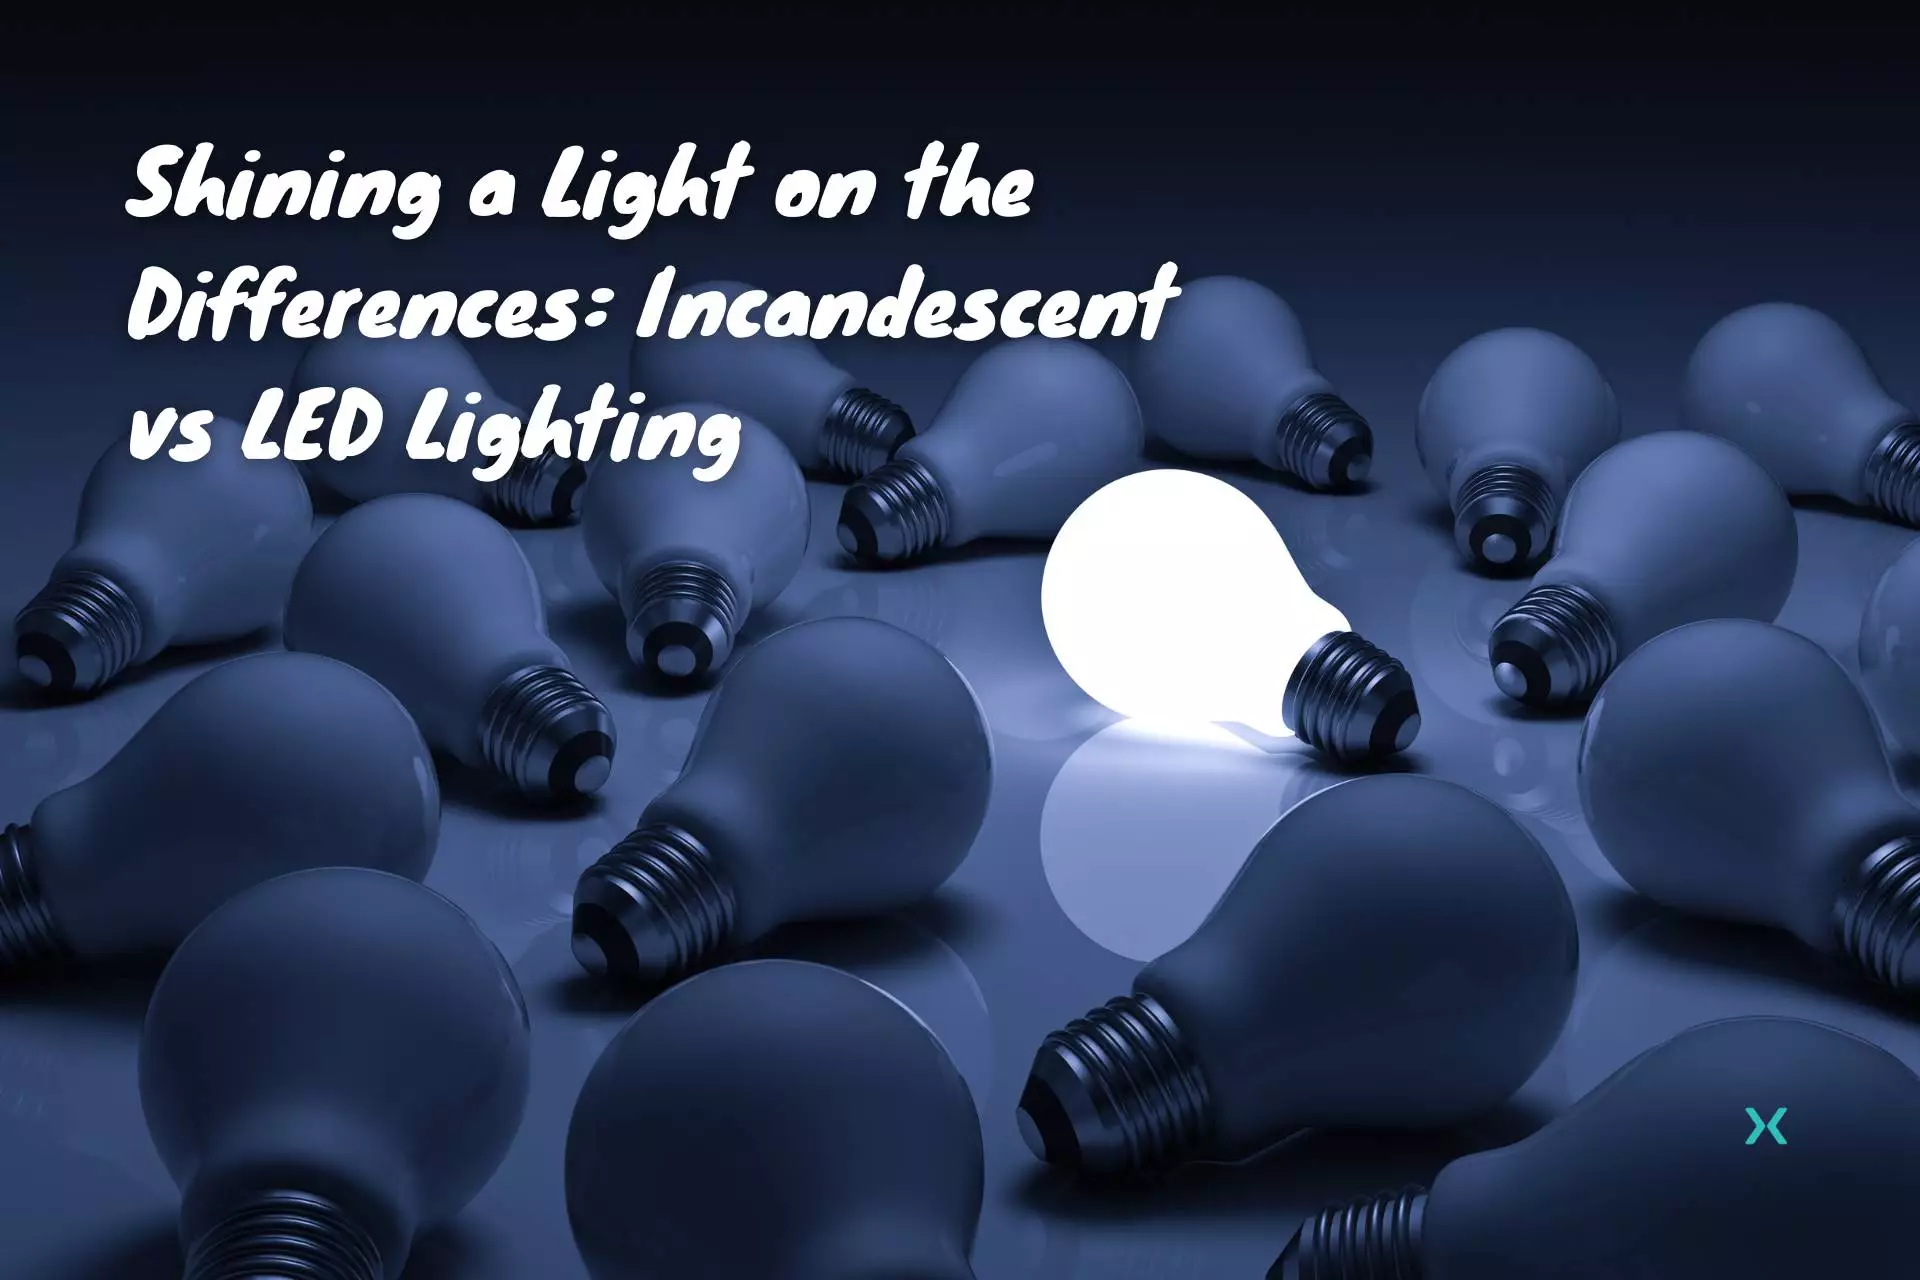 Incandescent vs LED Lighting